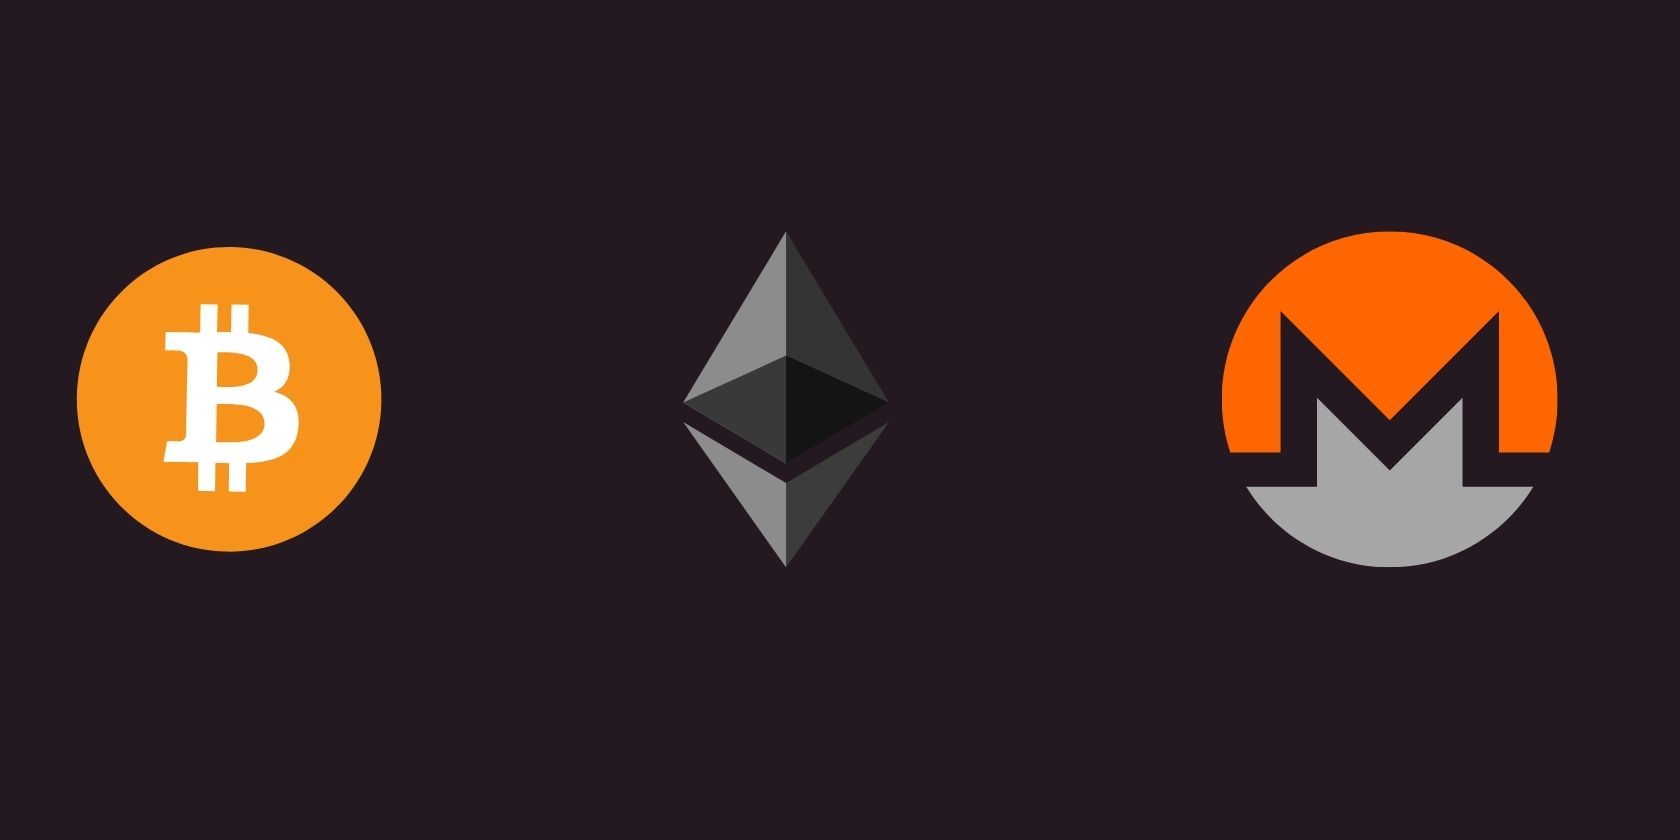 Bitcoin, Ethereum, Monero symbols are seen on black background